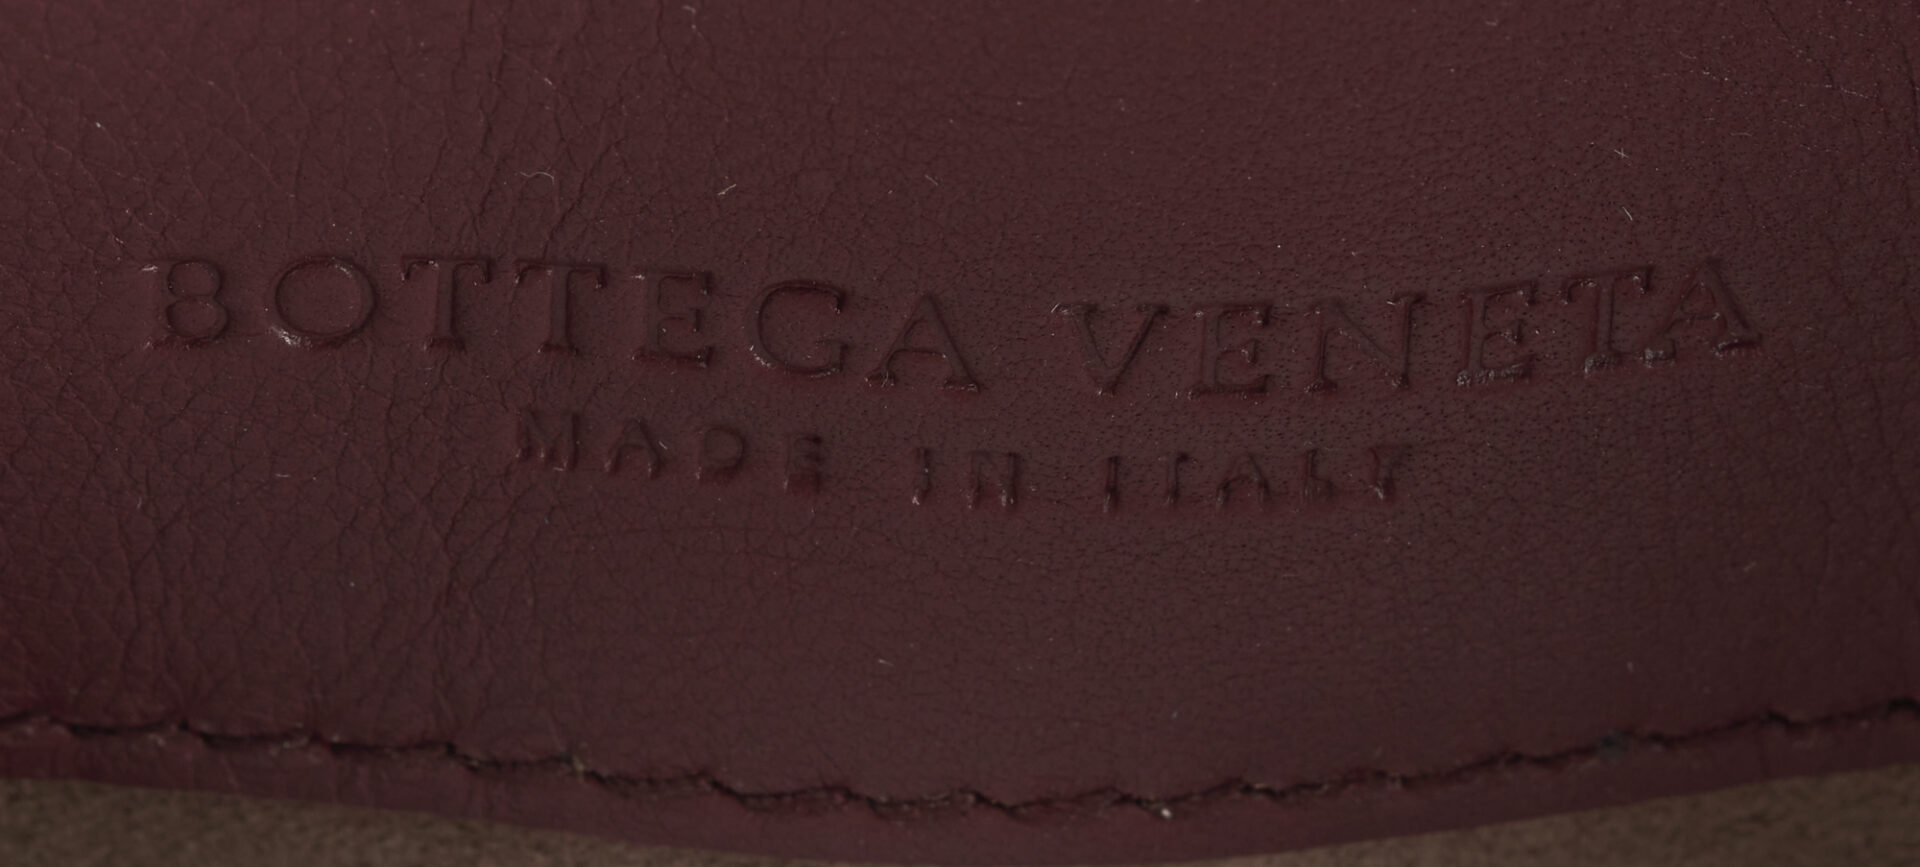 Lot 736: 2 Bottega Veneta Double Chain Intrecciato Bags Incl Tote & Convertible Shoulder Bag